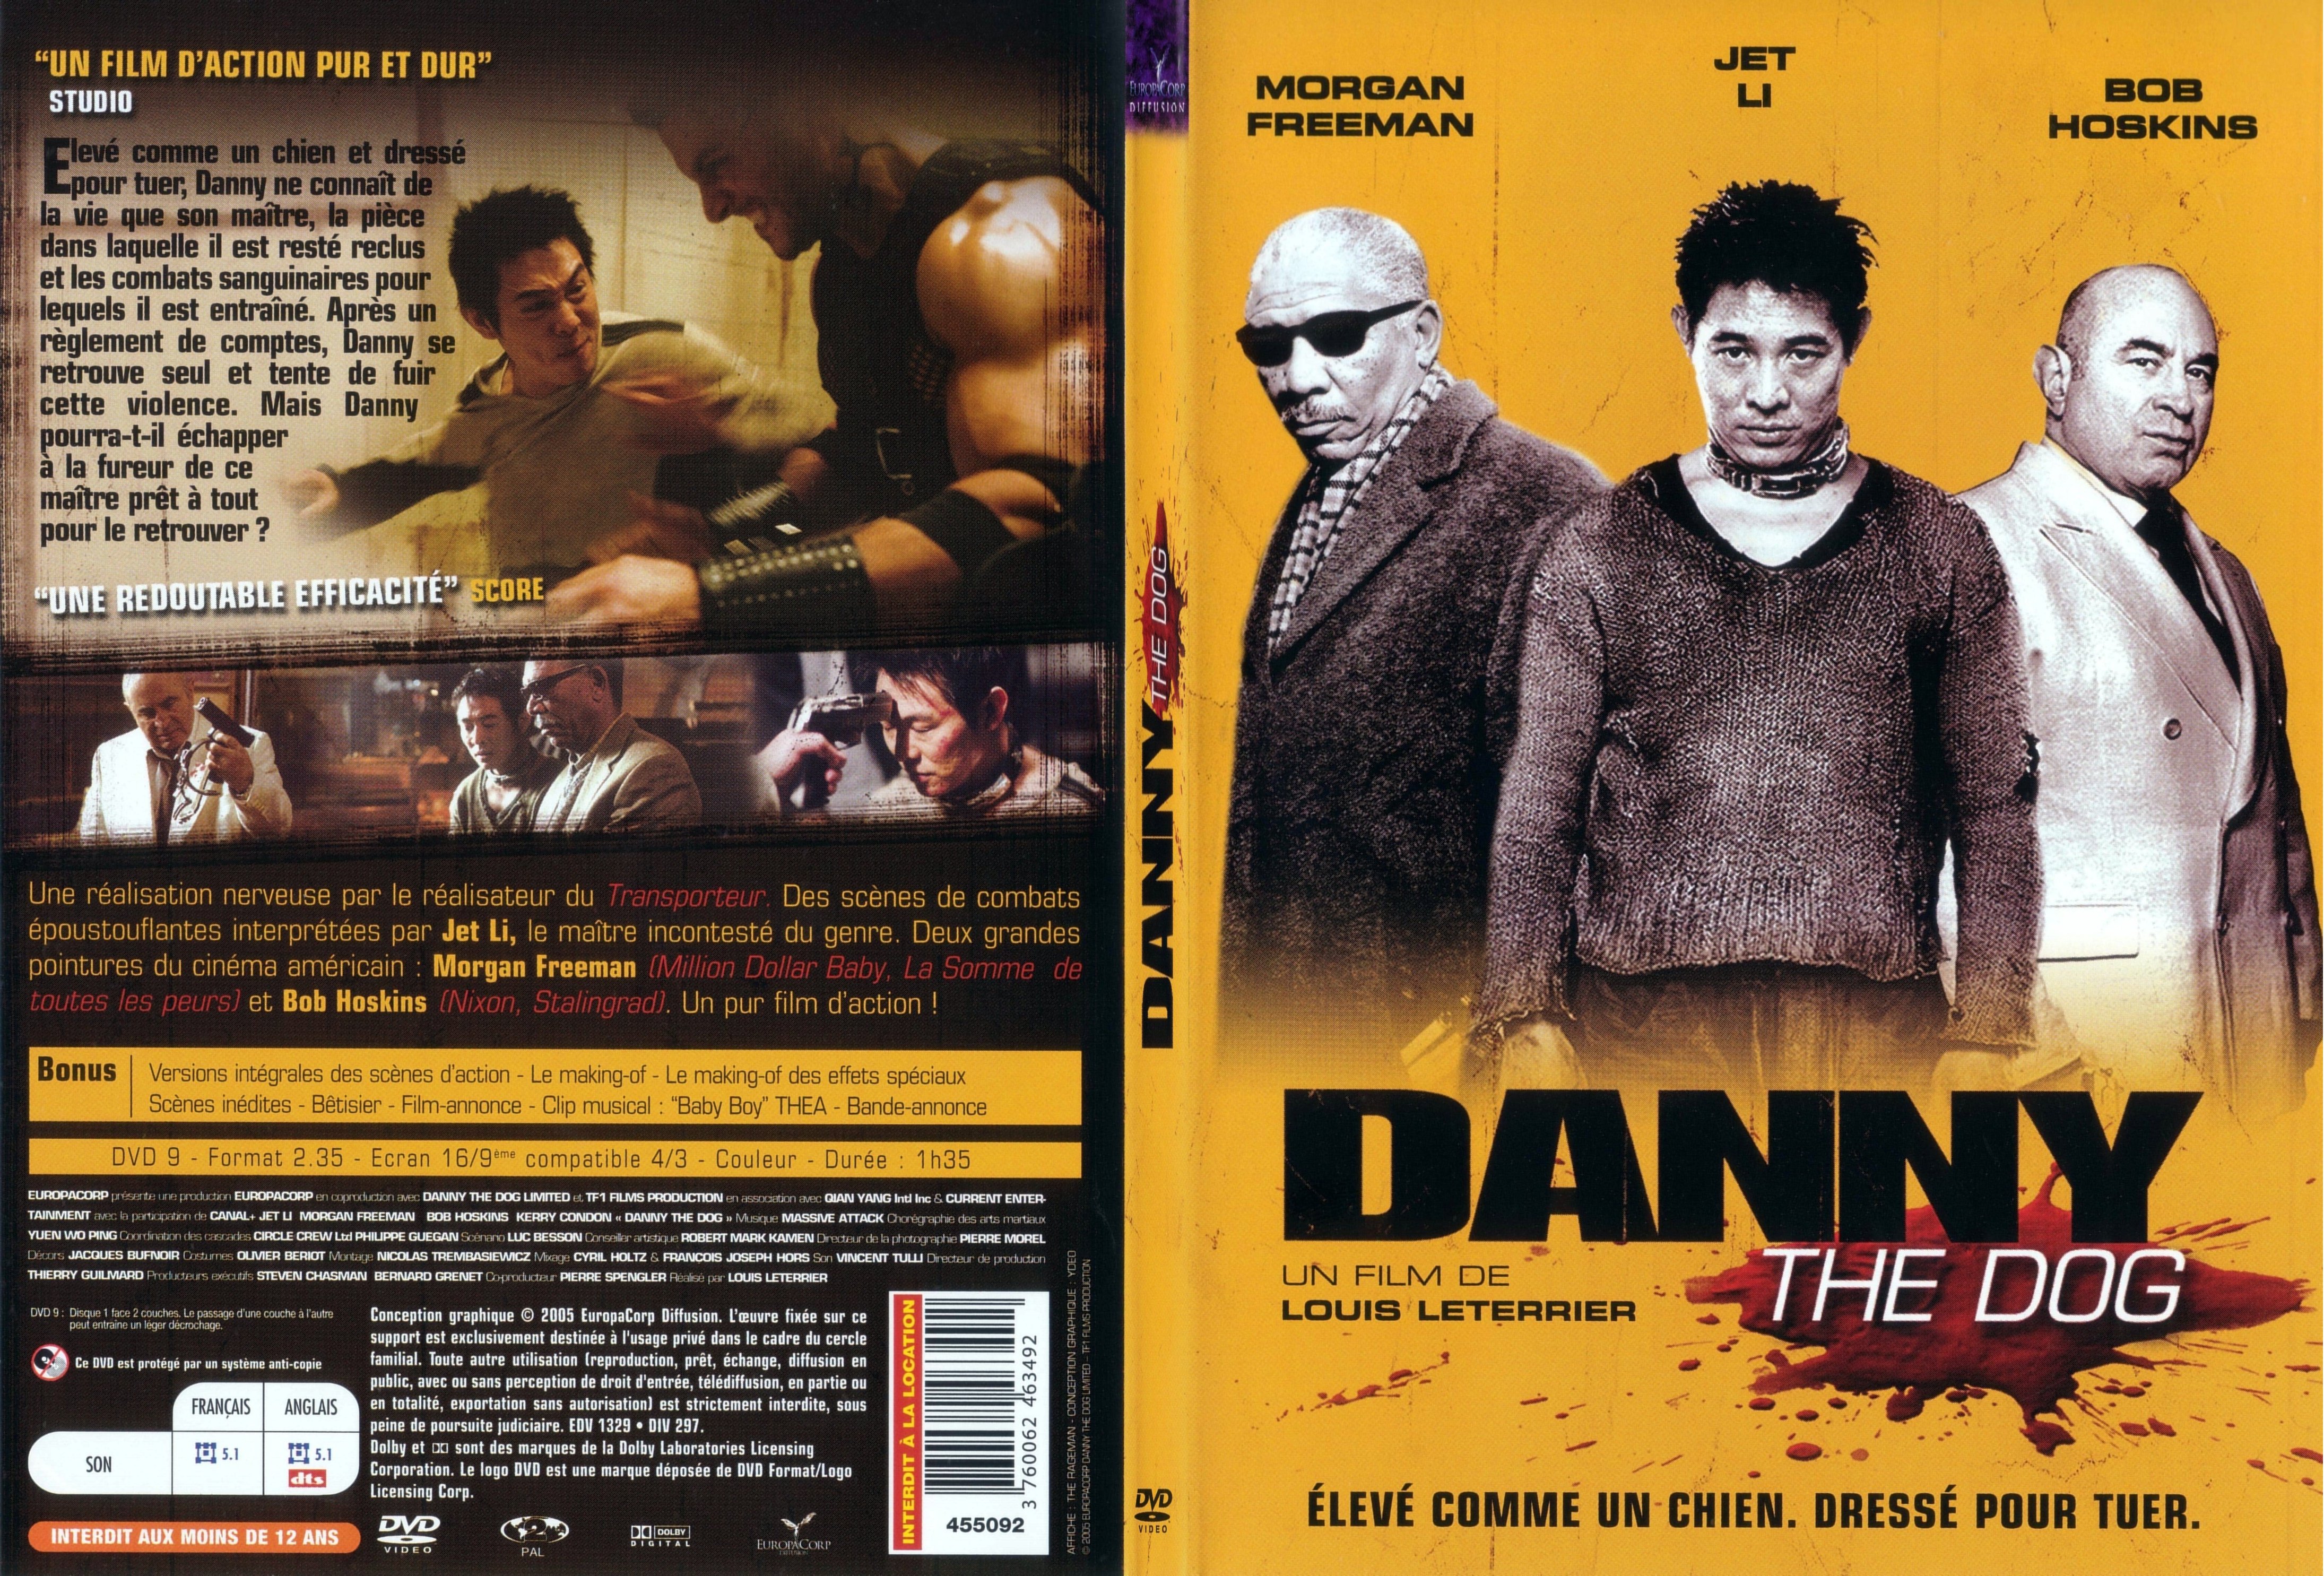 Jaquette DVD Danny the dog - SLIM